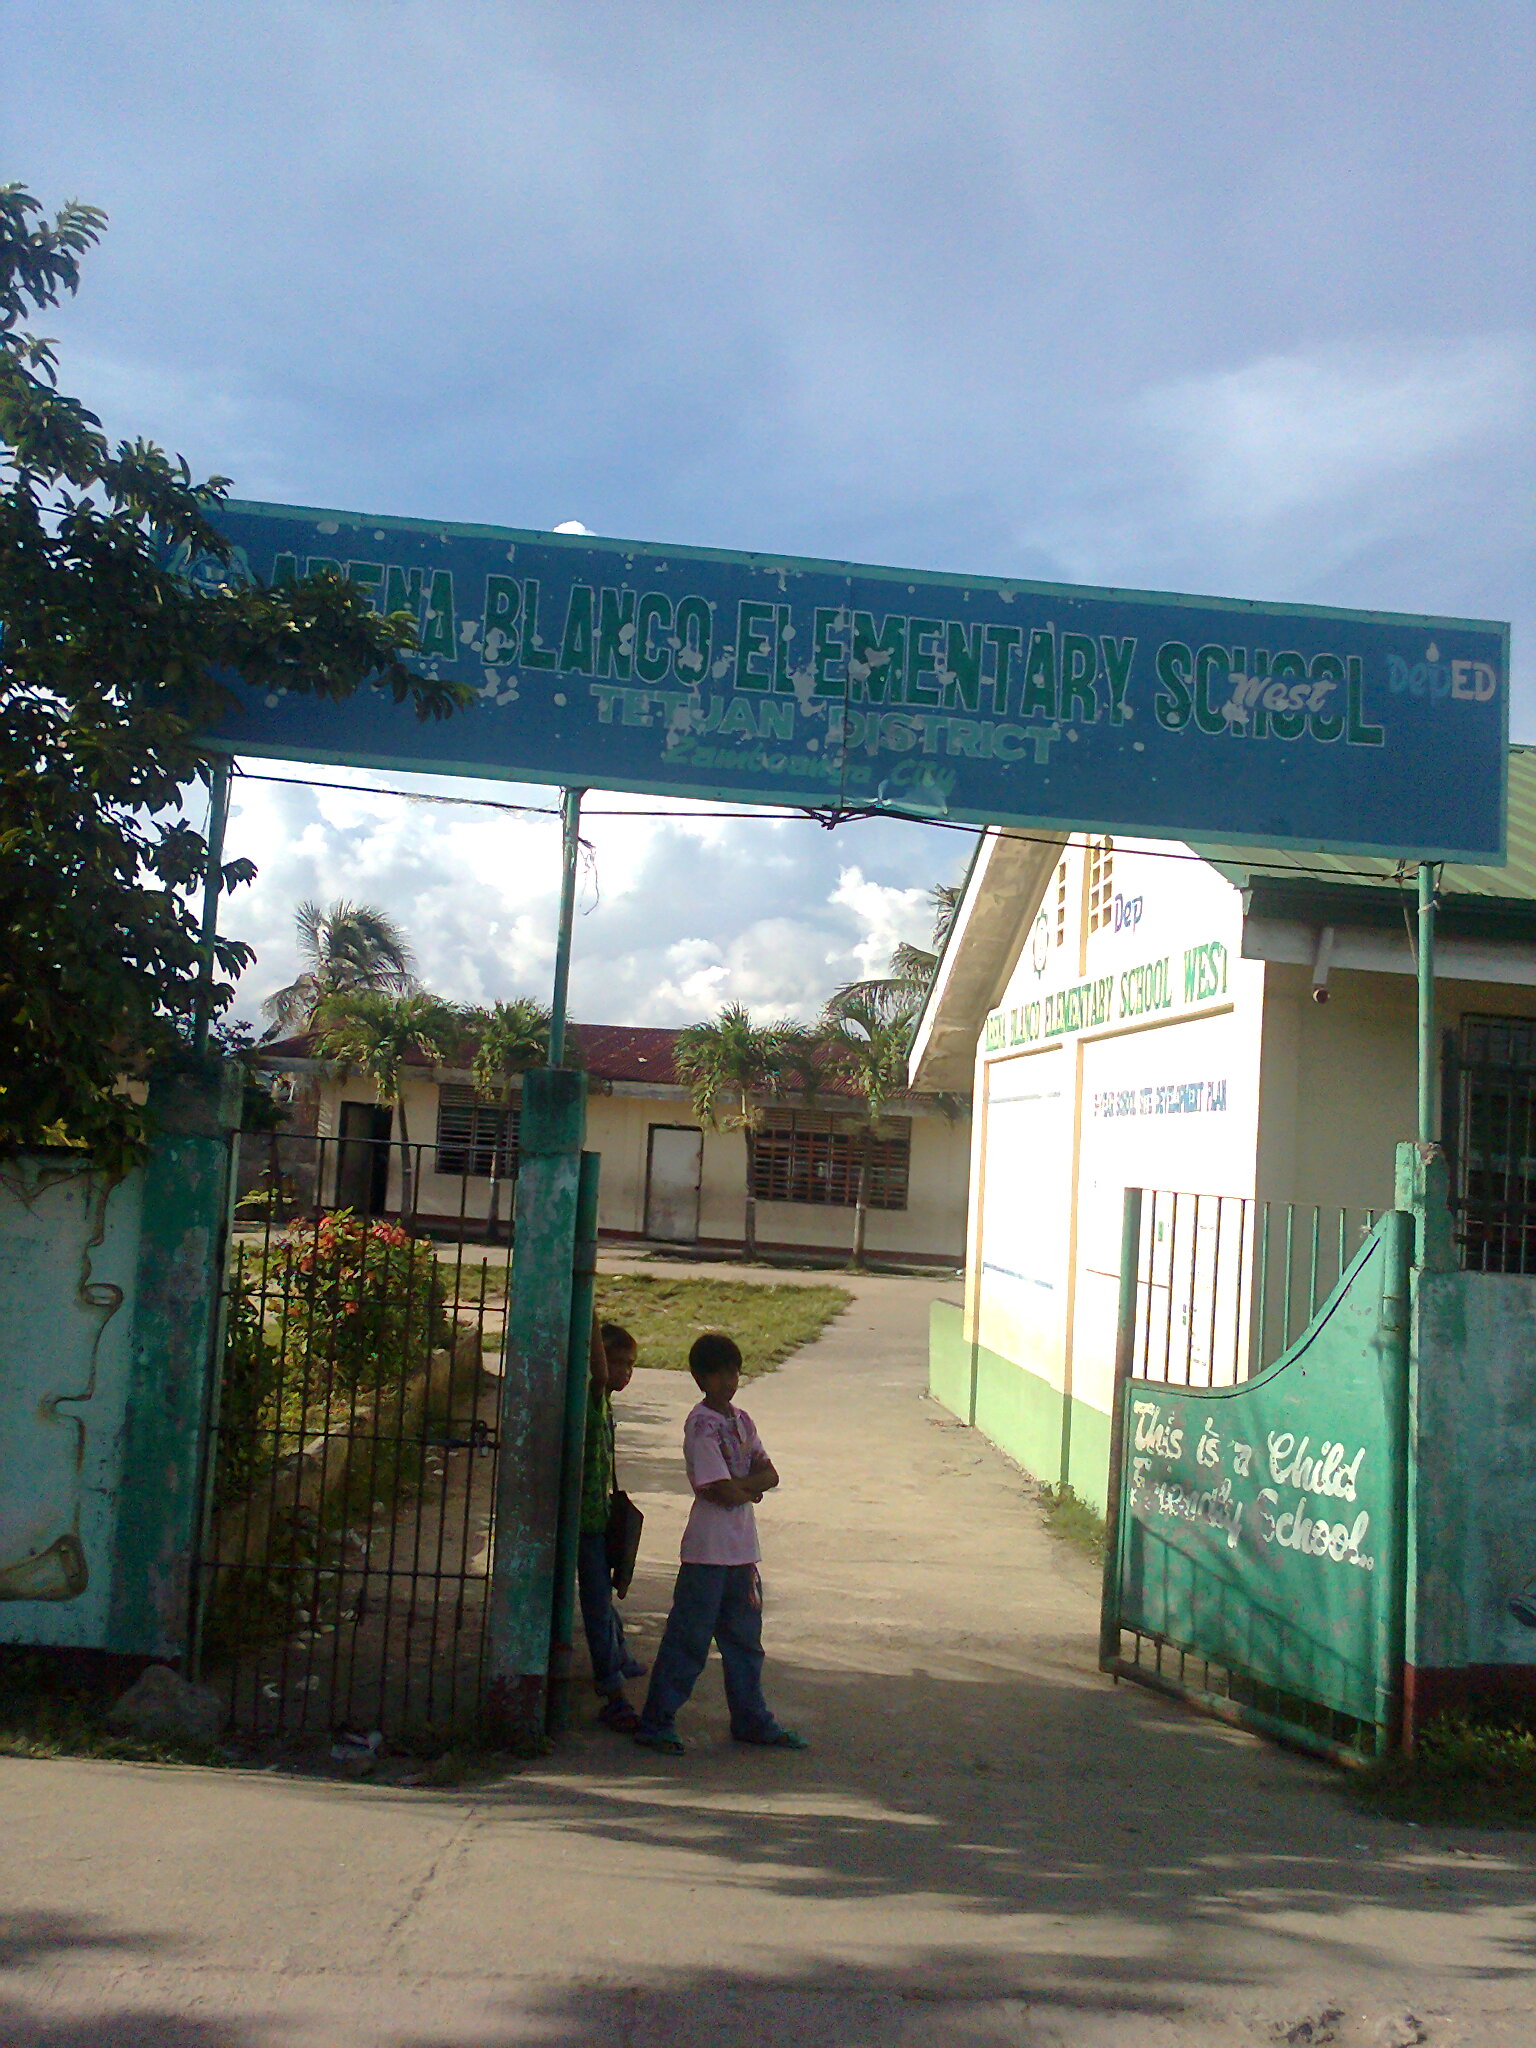 Arena_blanco_elementary_school_west_arena_blanco_zamboanga_city_4.jpg